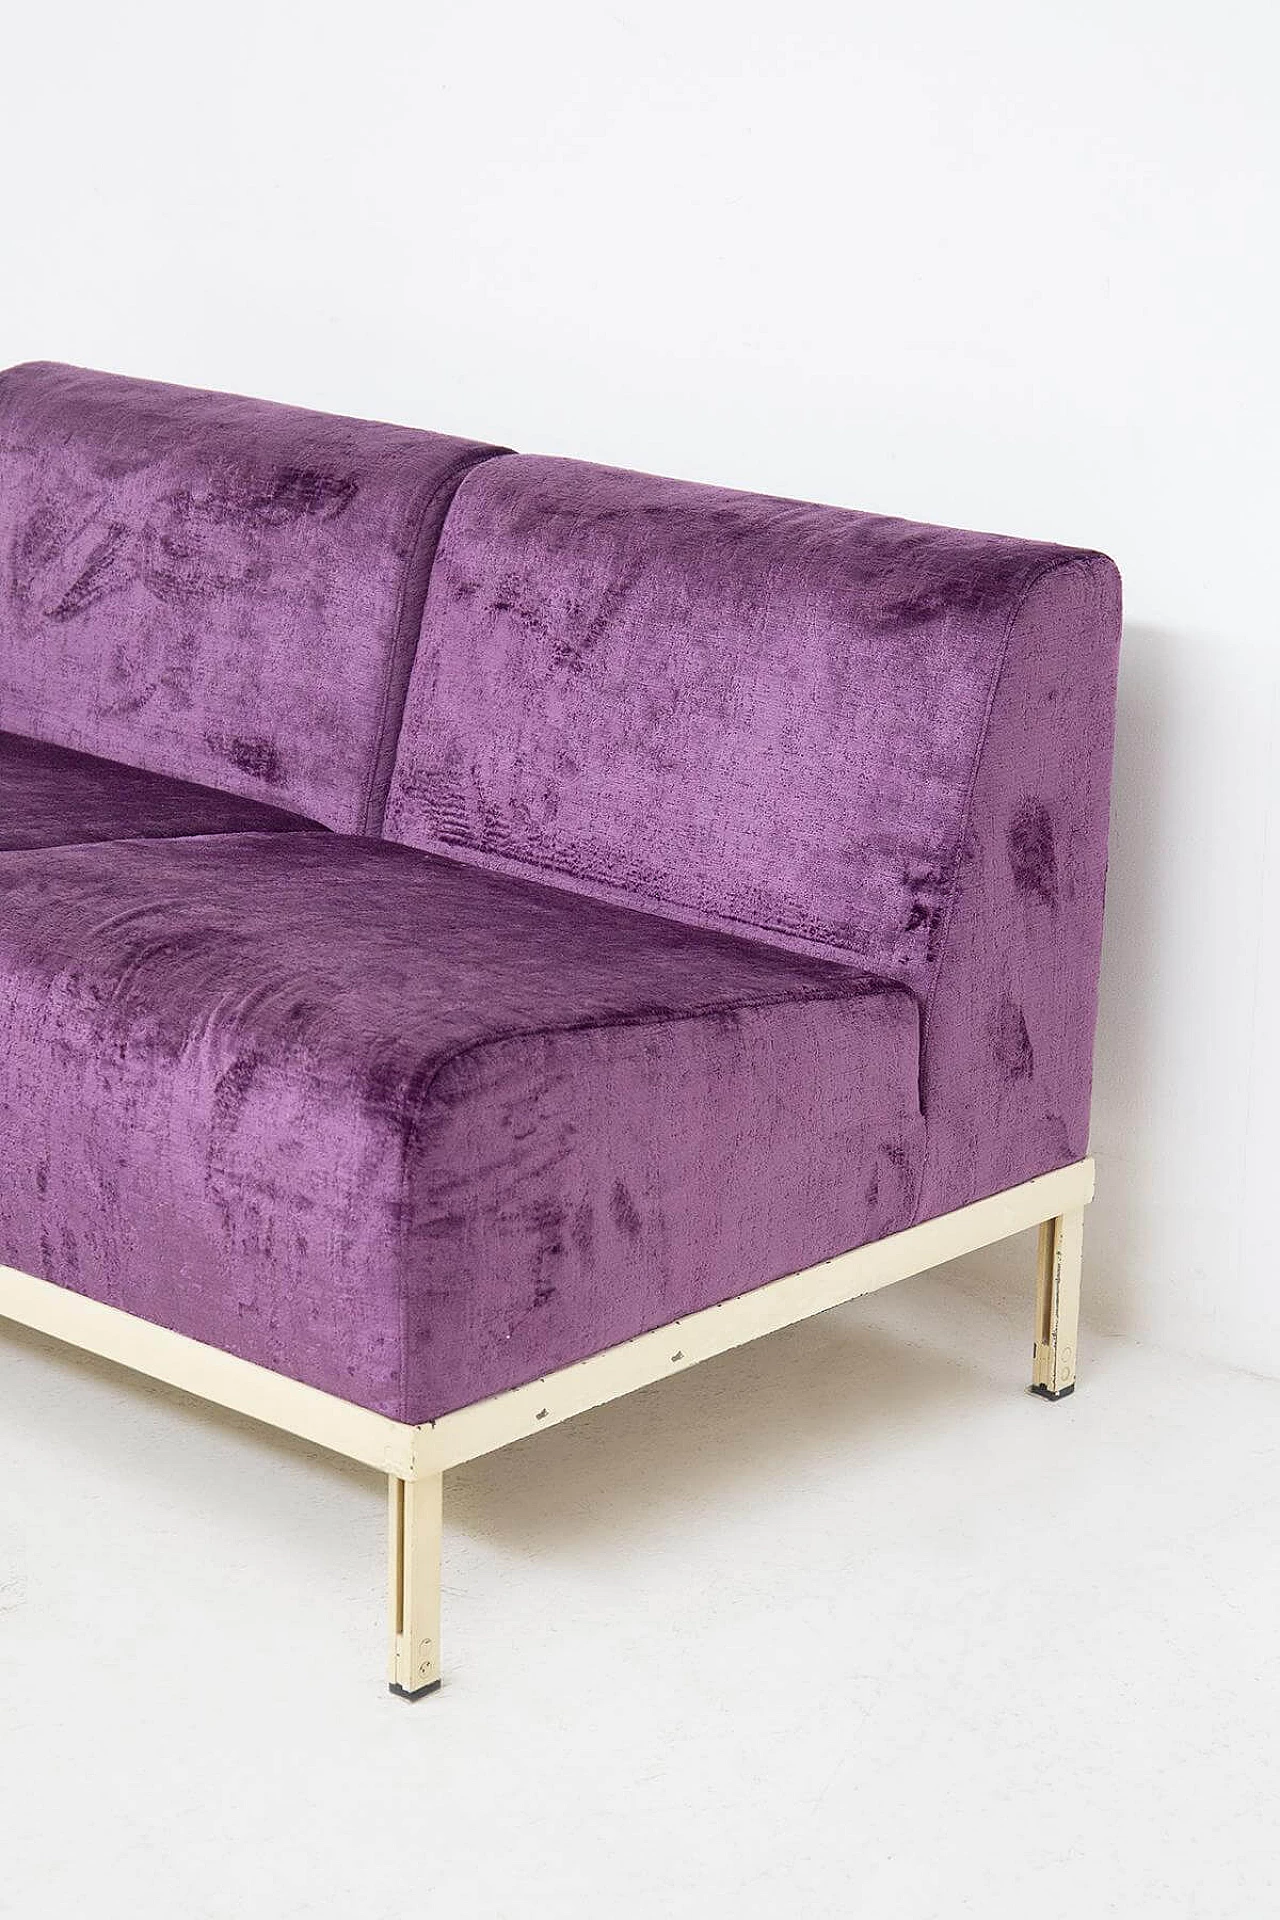 Pair of Gianfranco Frattini sofas in purple velvet, 1950s 1466272